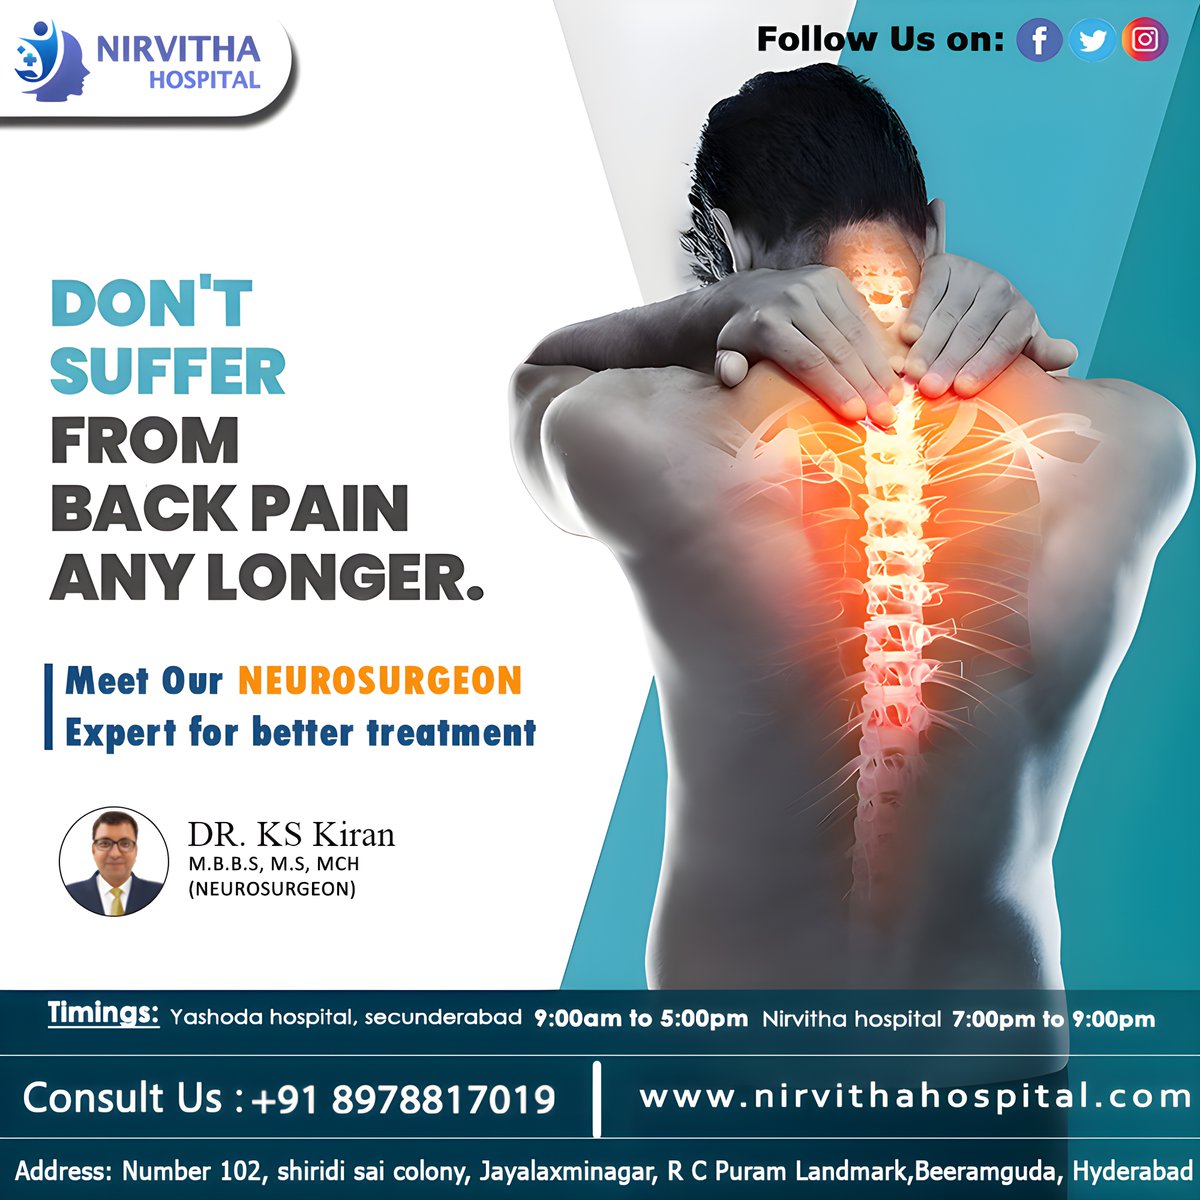 Don’t suffer from #backpain any longer. For better treatment consult our expert doctor.

#drkskiran #neurologist #yashodahospital #neurologyproblems #Hyderabad #Prevention #spineproblems #nerves #besttreatment #besthealthcare  #brainhealth #headaches 

nirvithahospital.com